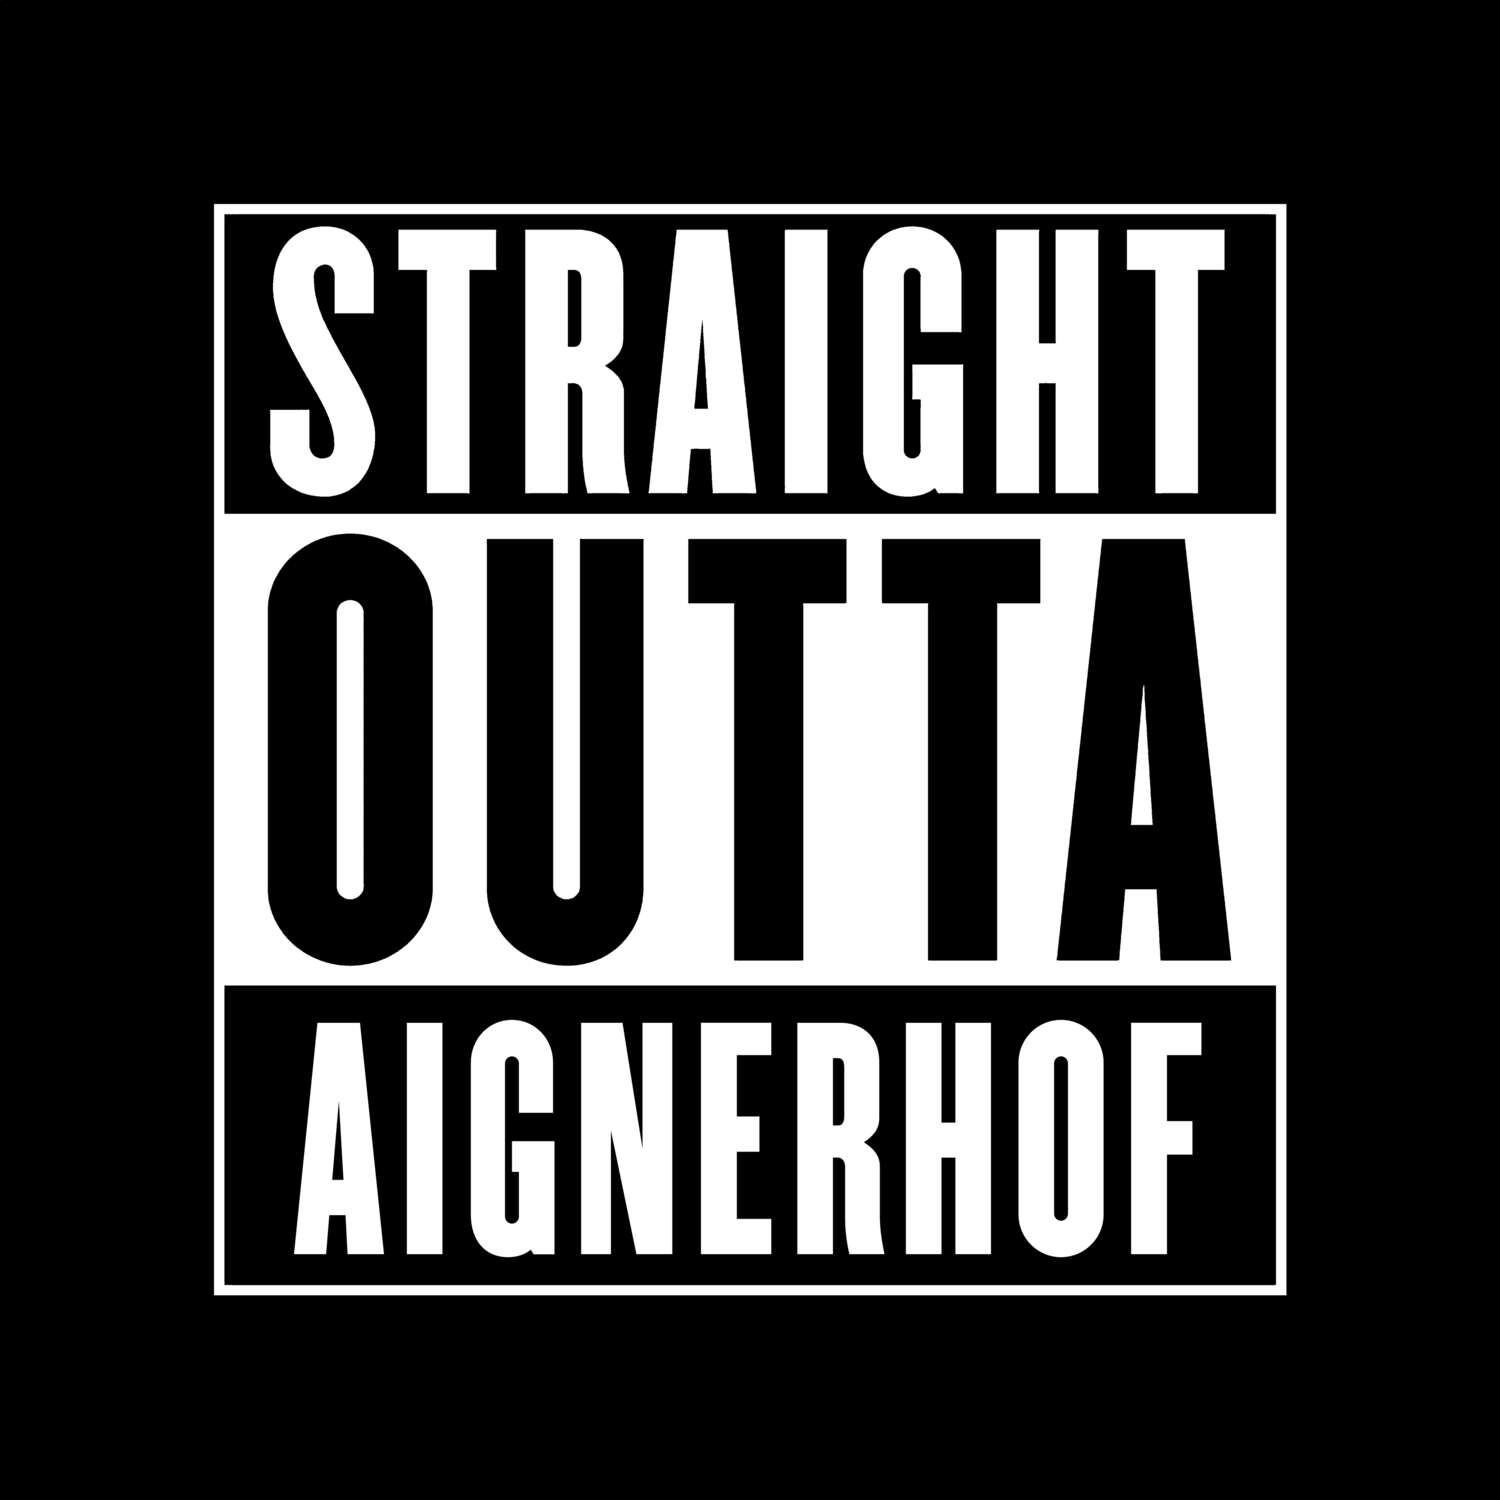 Aignerhof T-Shirt »Straight Outta«